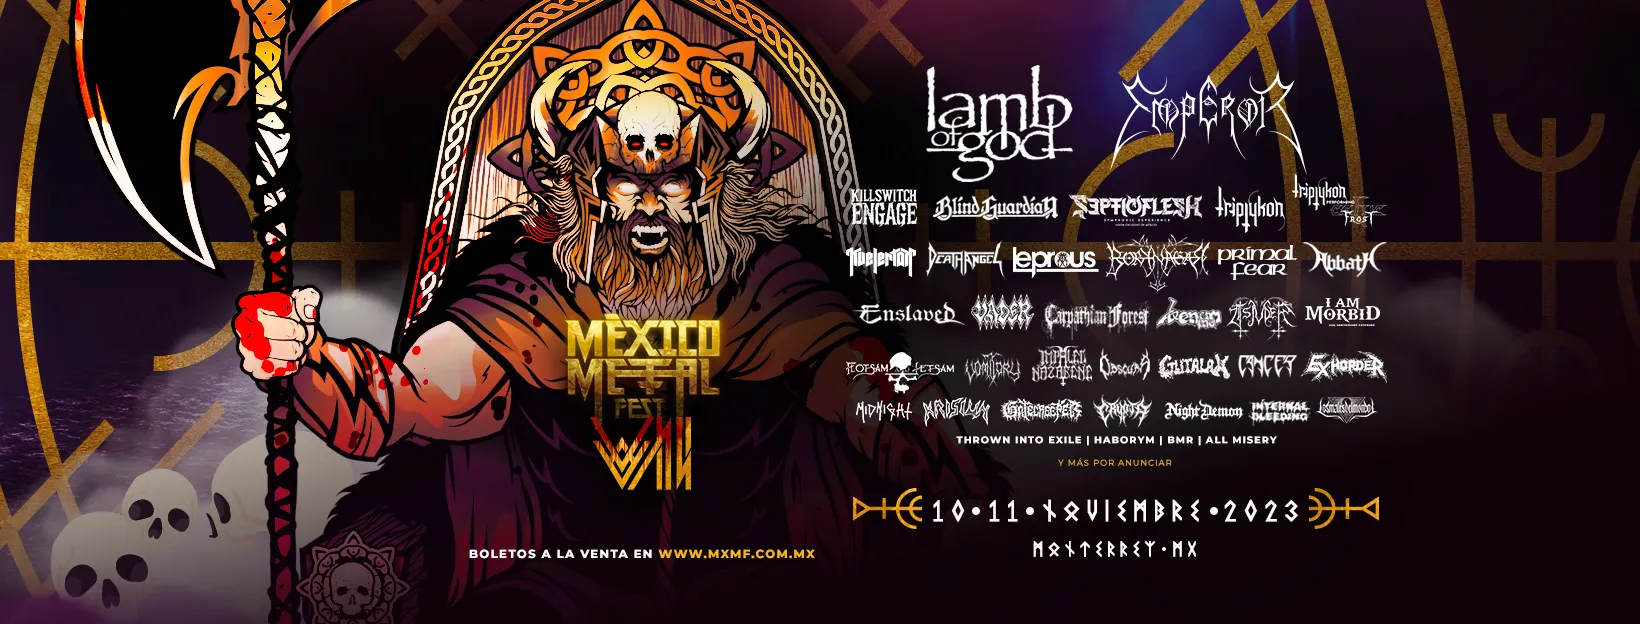 México Metal Fest VII